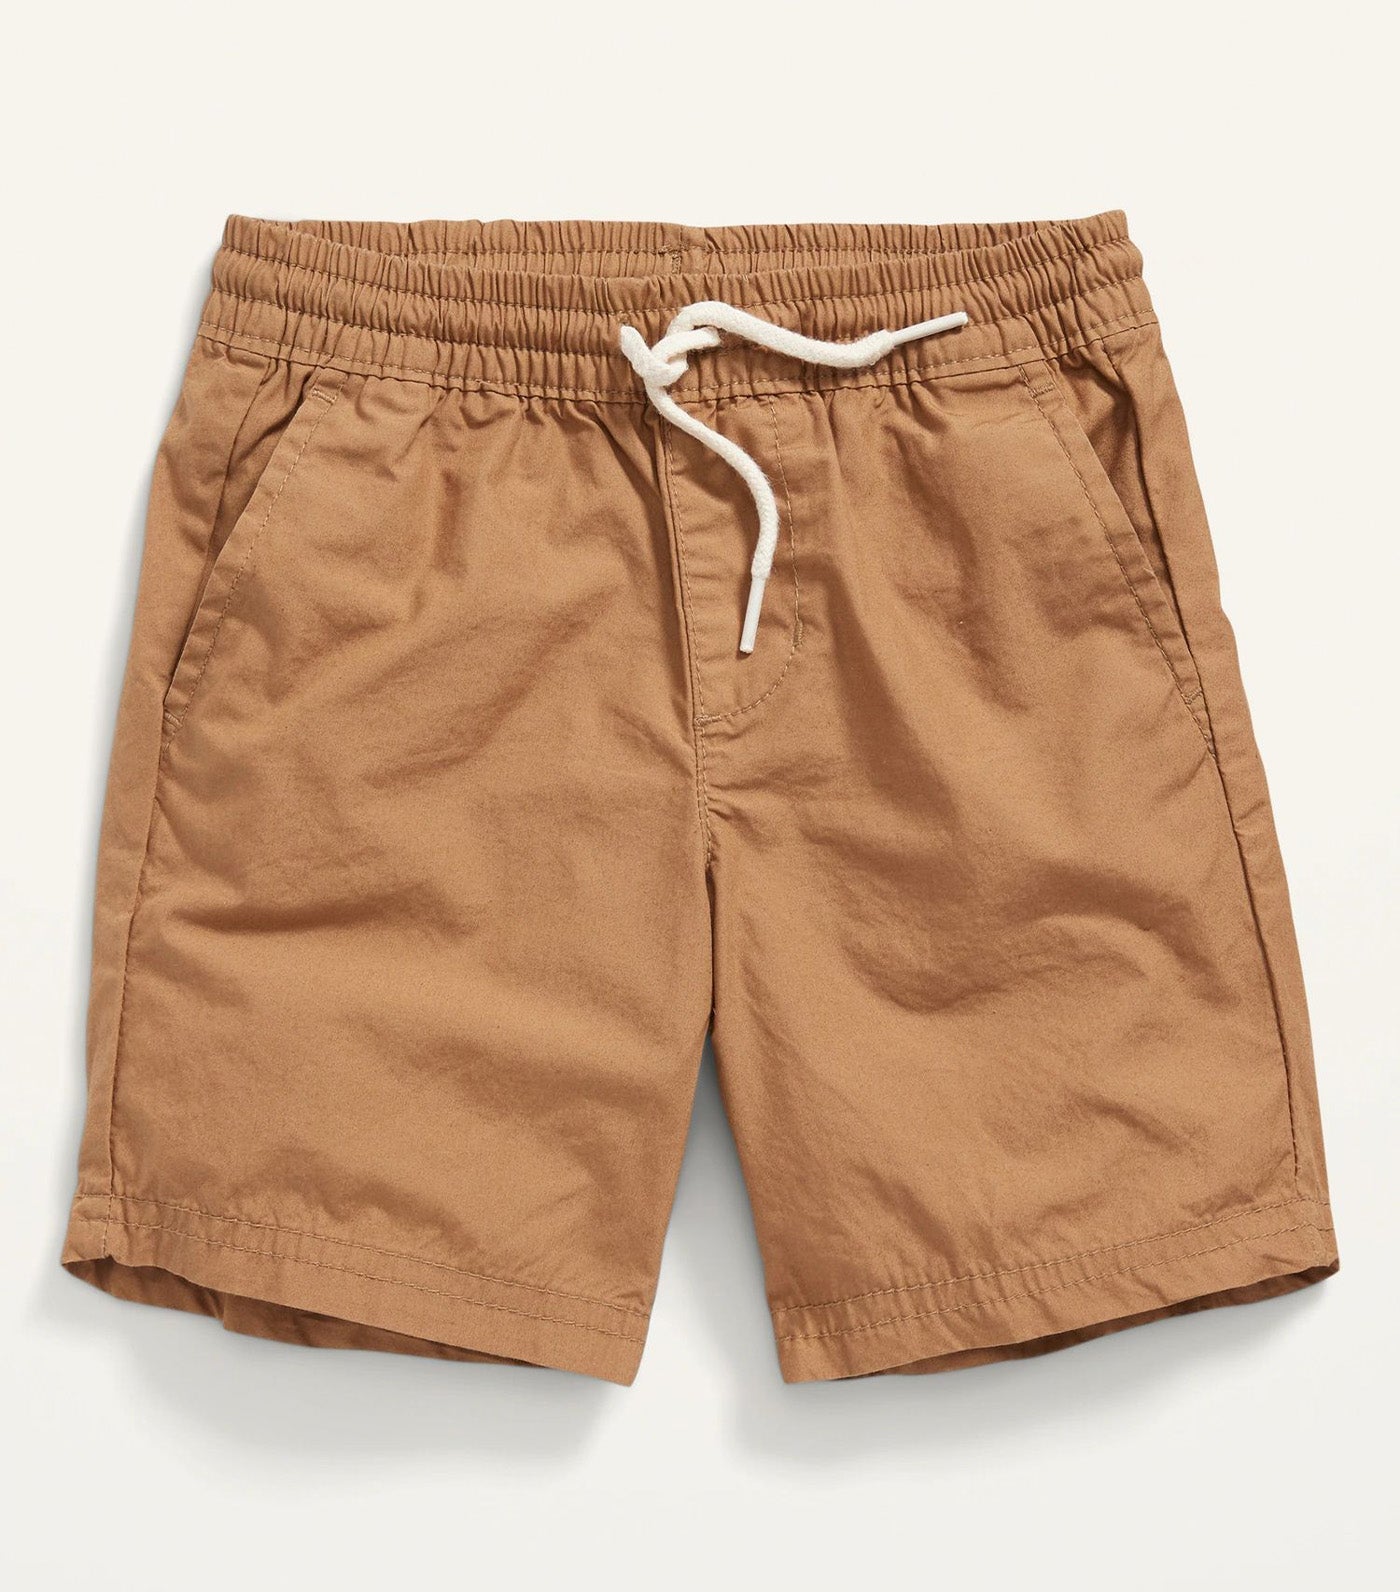 Unisex Cotton Poplin Pull-On Shorts for Toddler - Doe a Deer